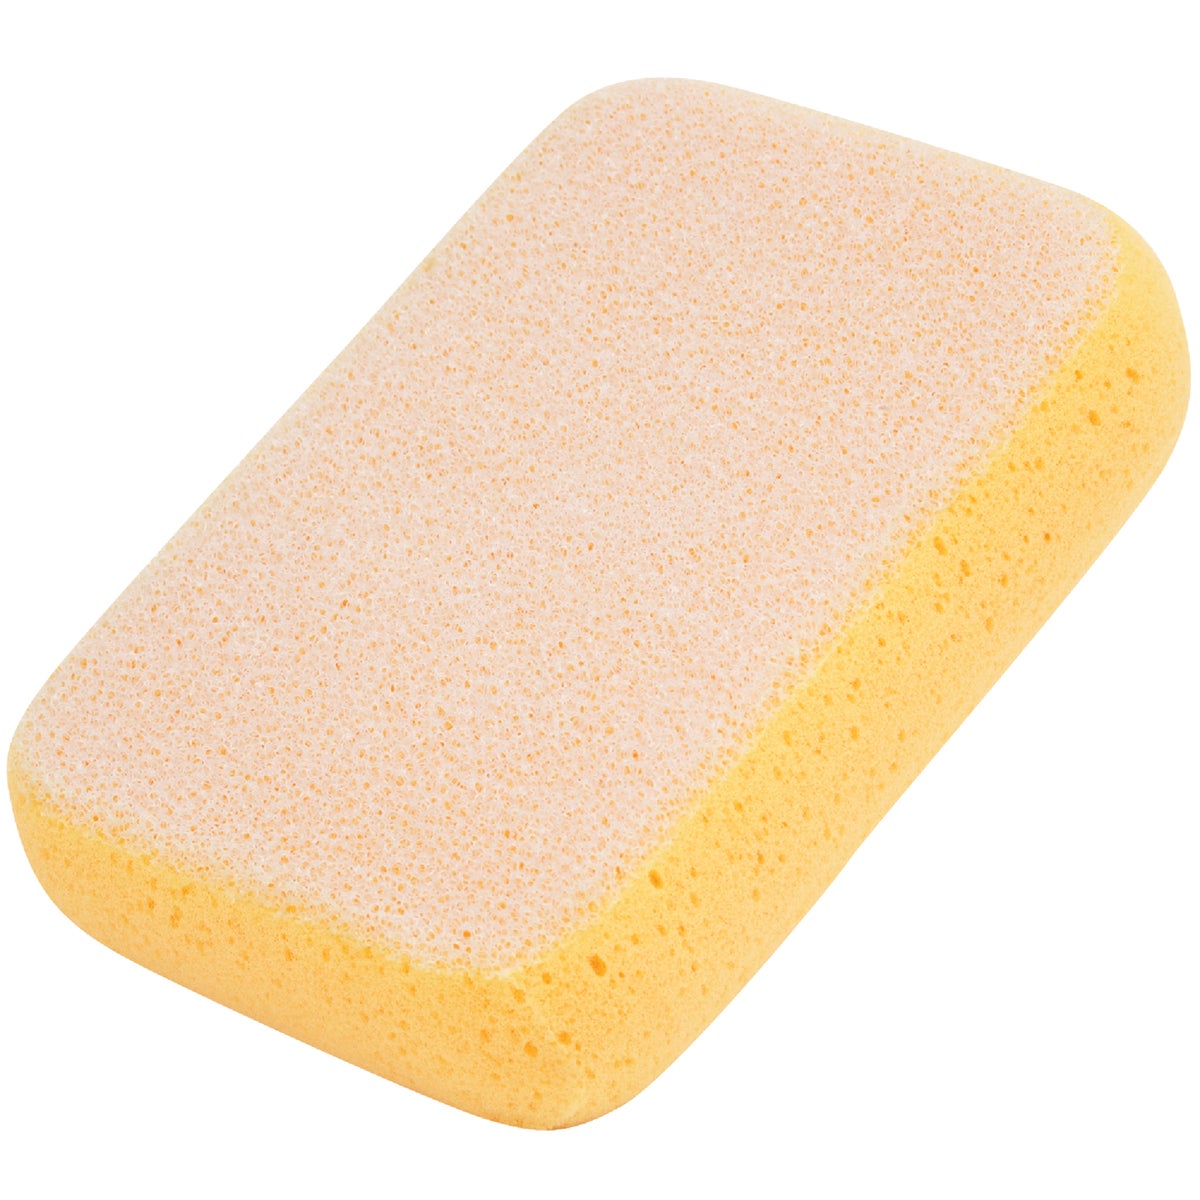 Item 310344, Double use sponge.